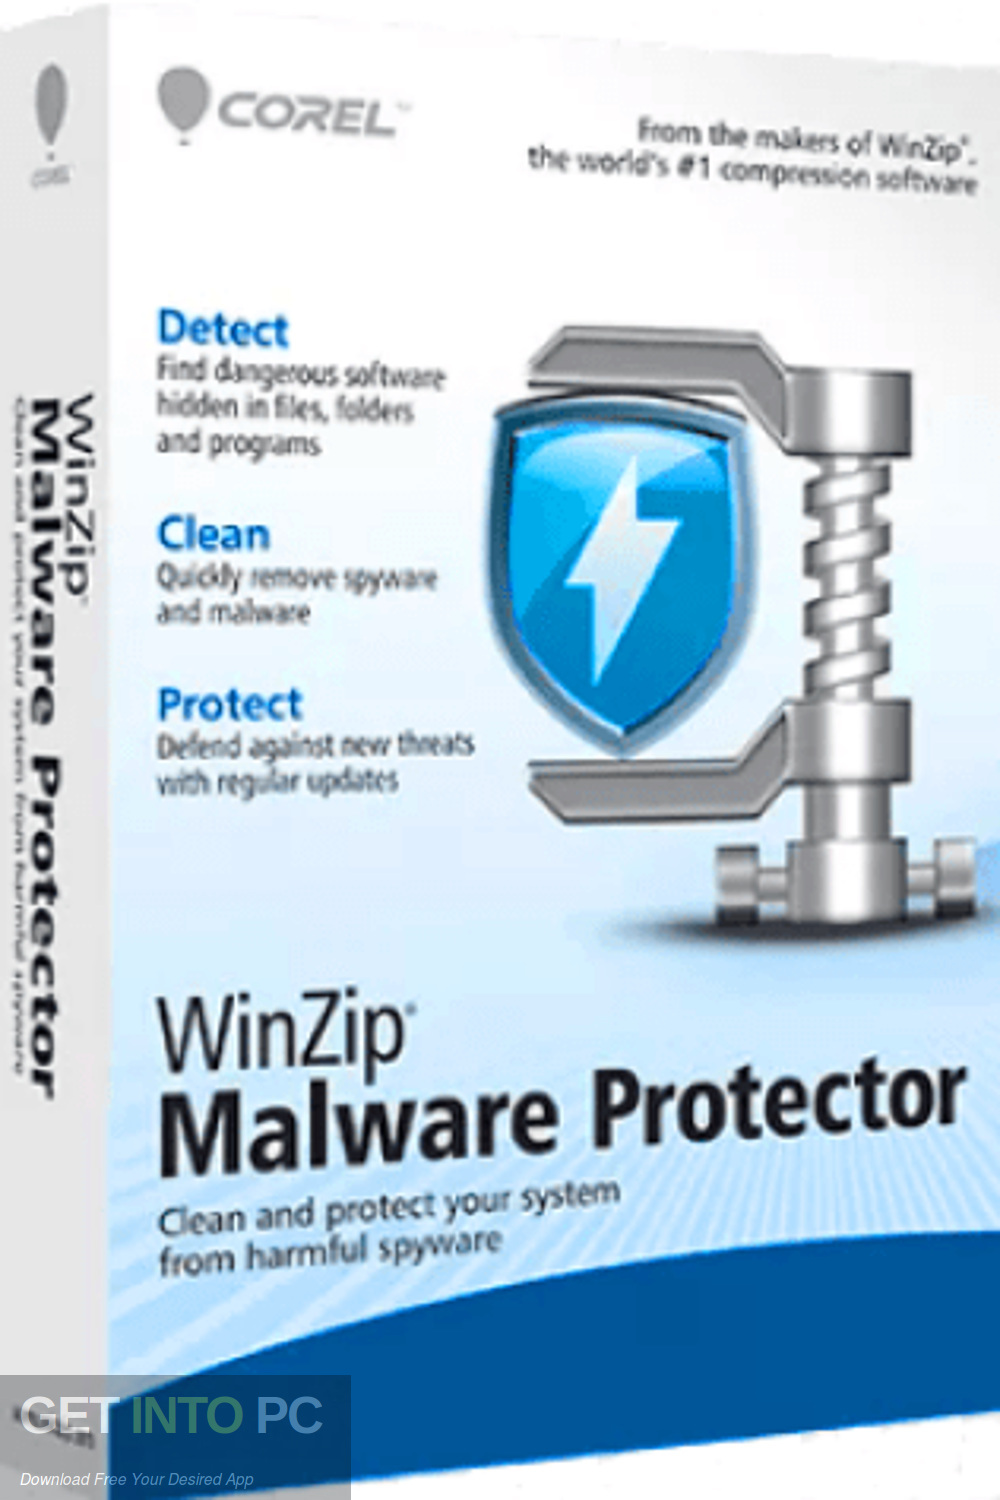 Winzip malware protector license key generator reviews